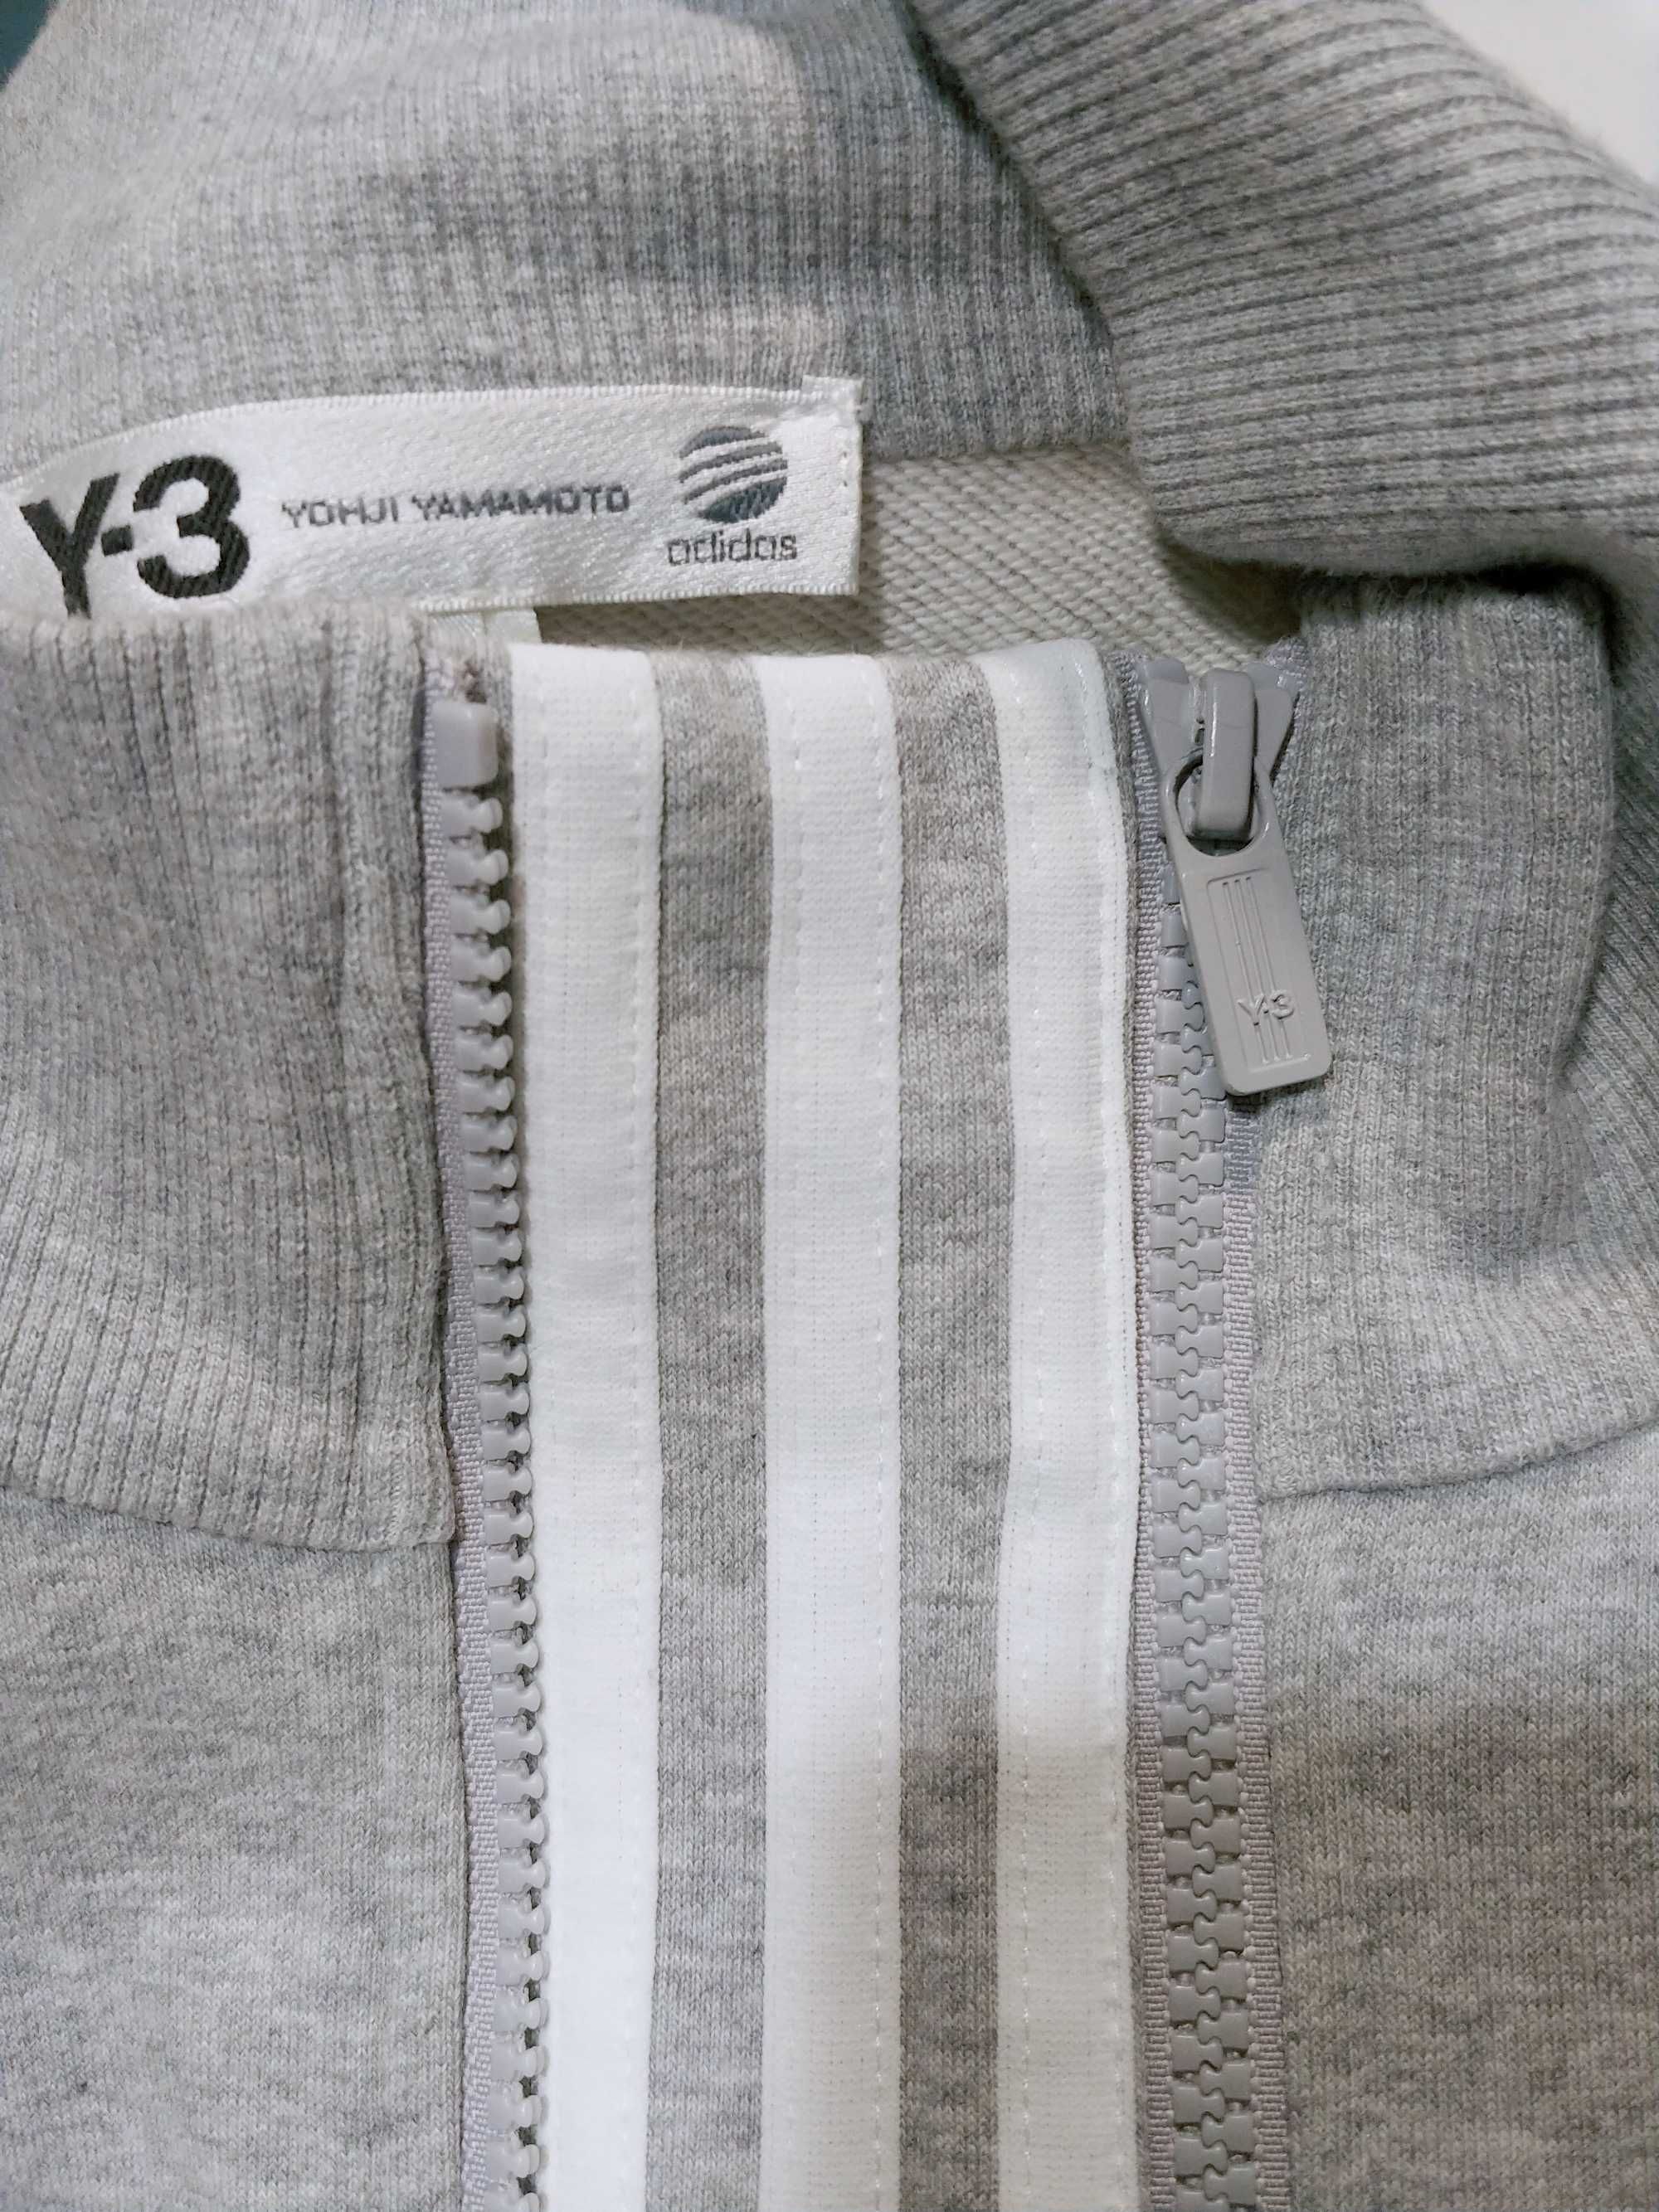 Bluza rozpinana Yohji Yamamoto Y-3 Adidas rozm. L/XL oversize